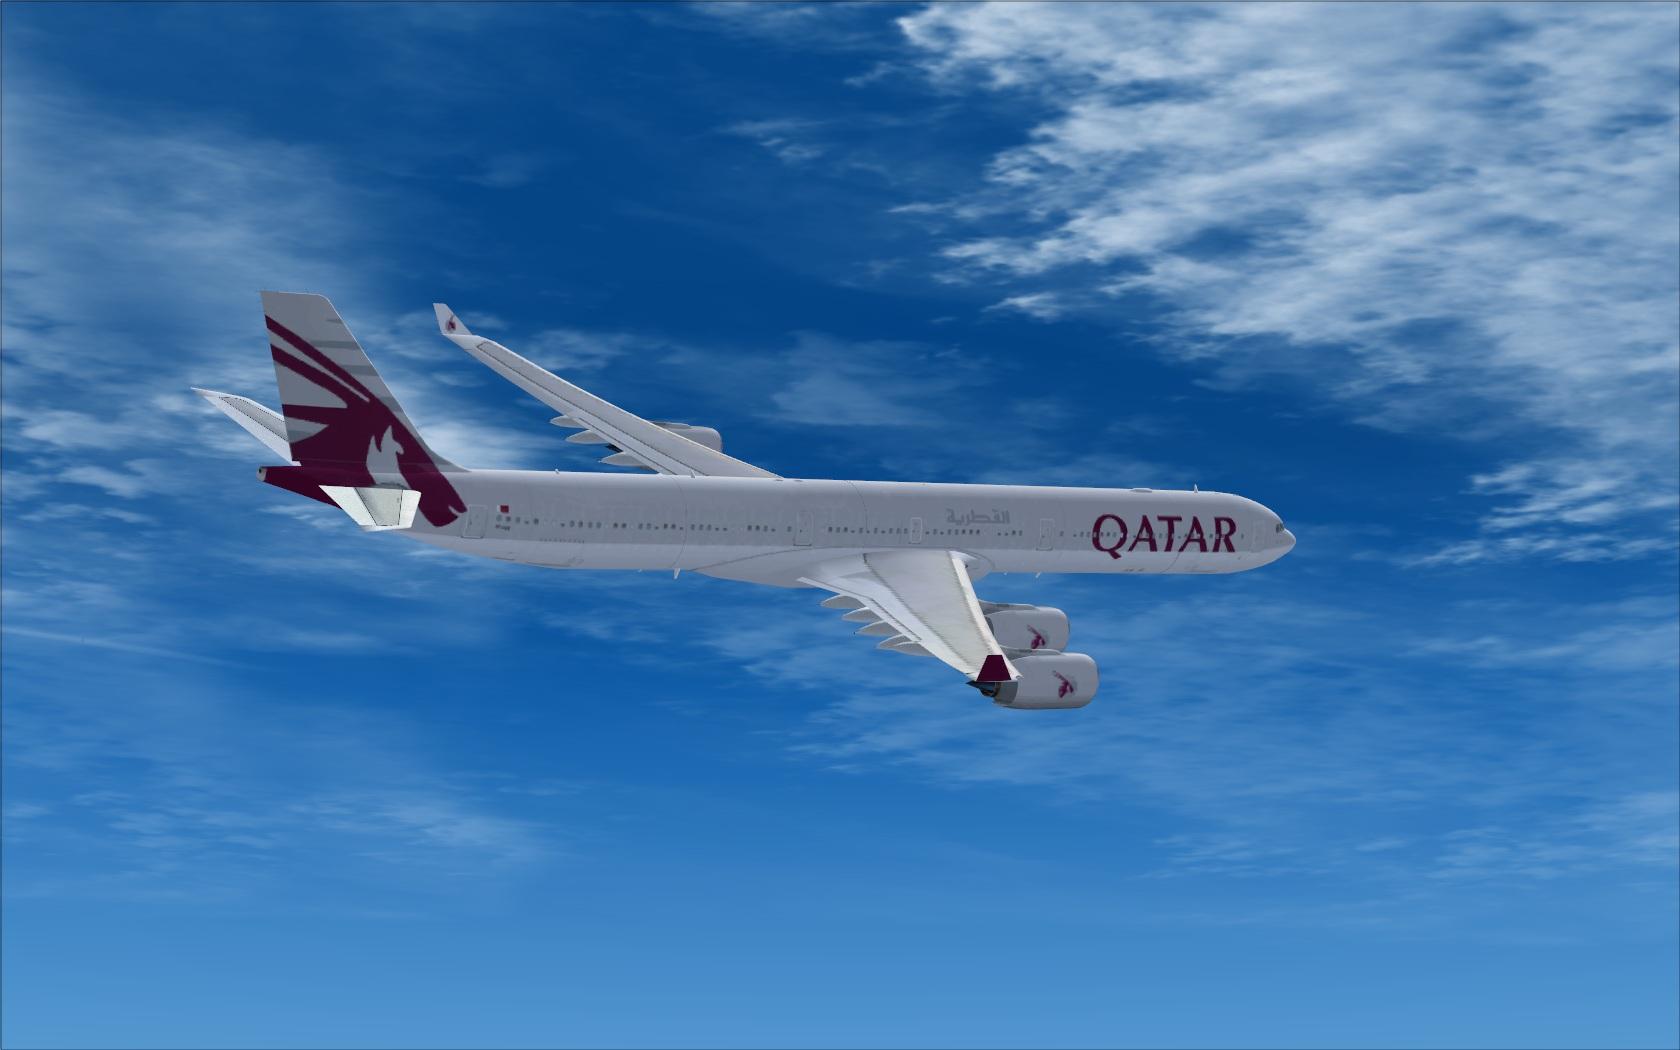 Qatar Airways Wallpaper. Qatar